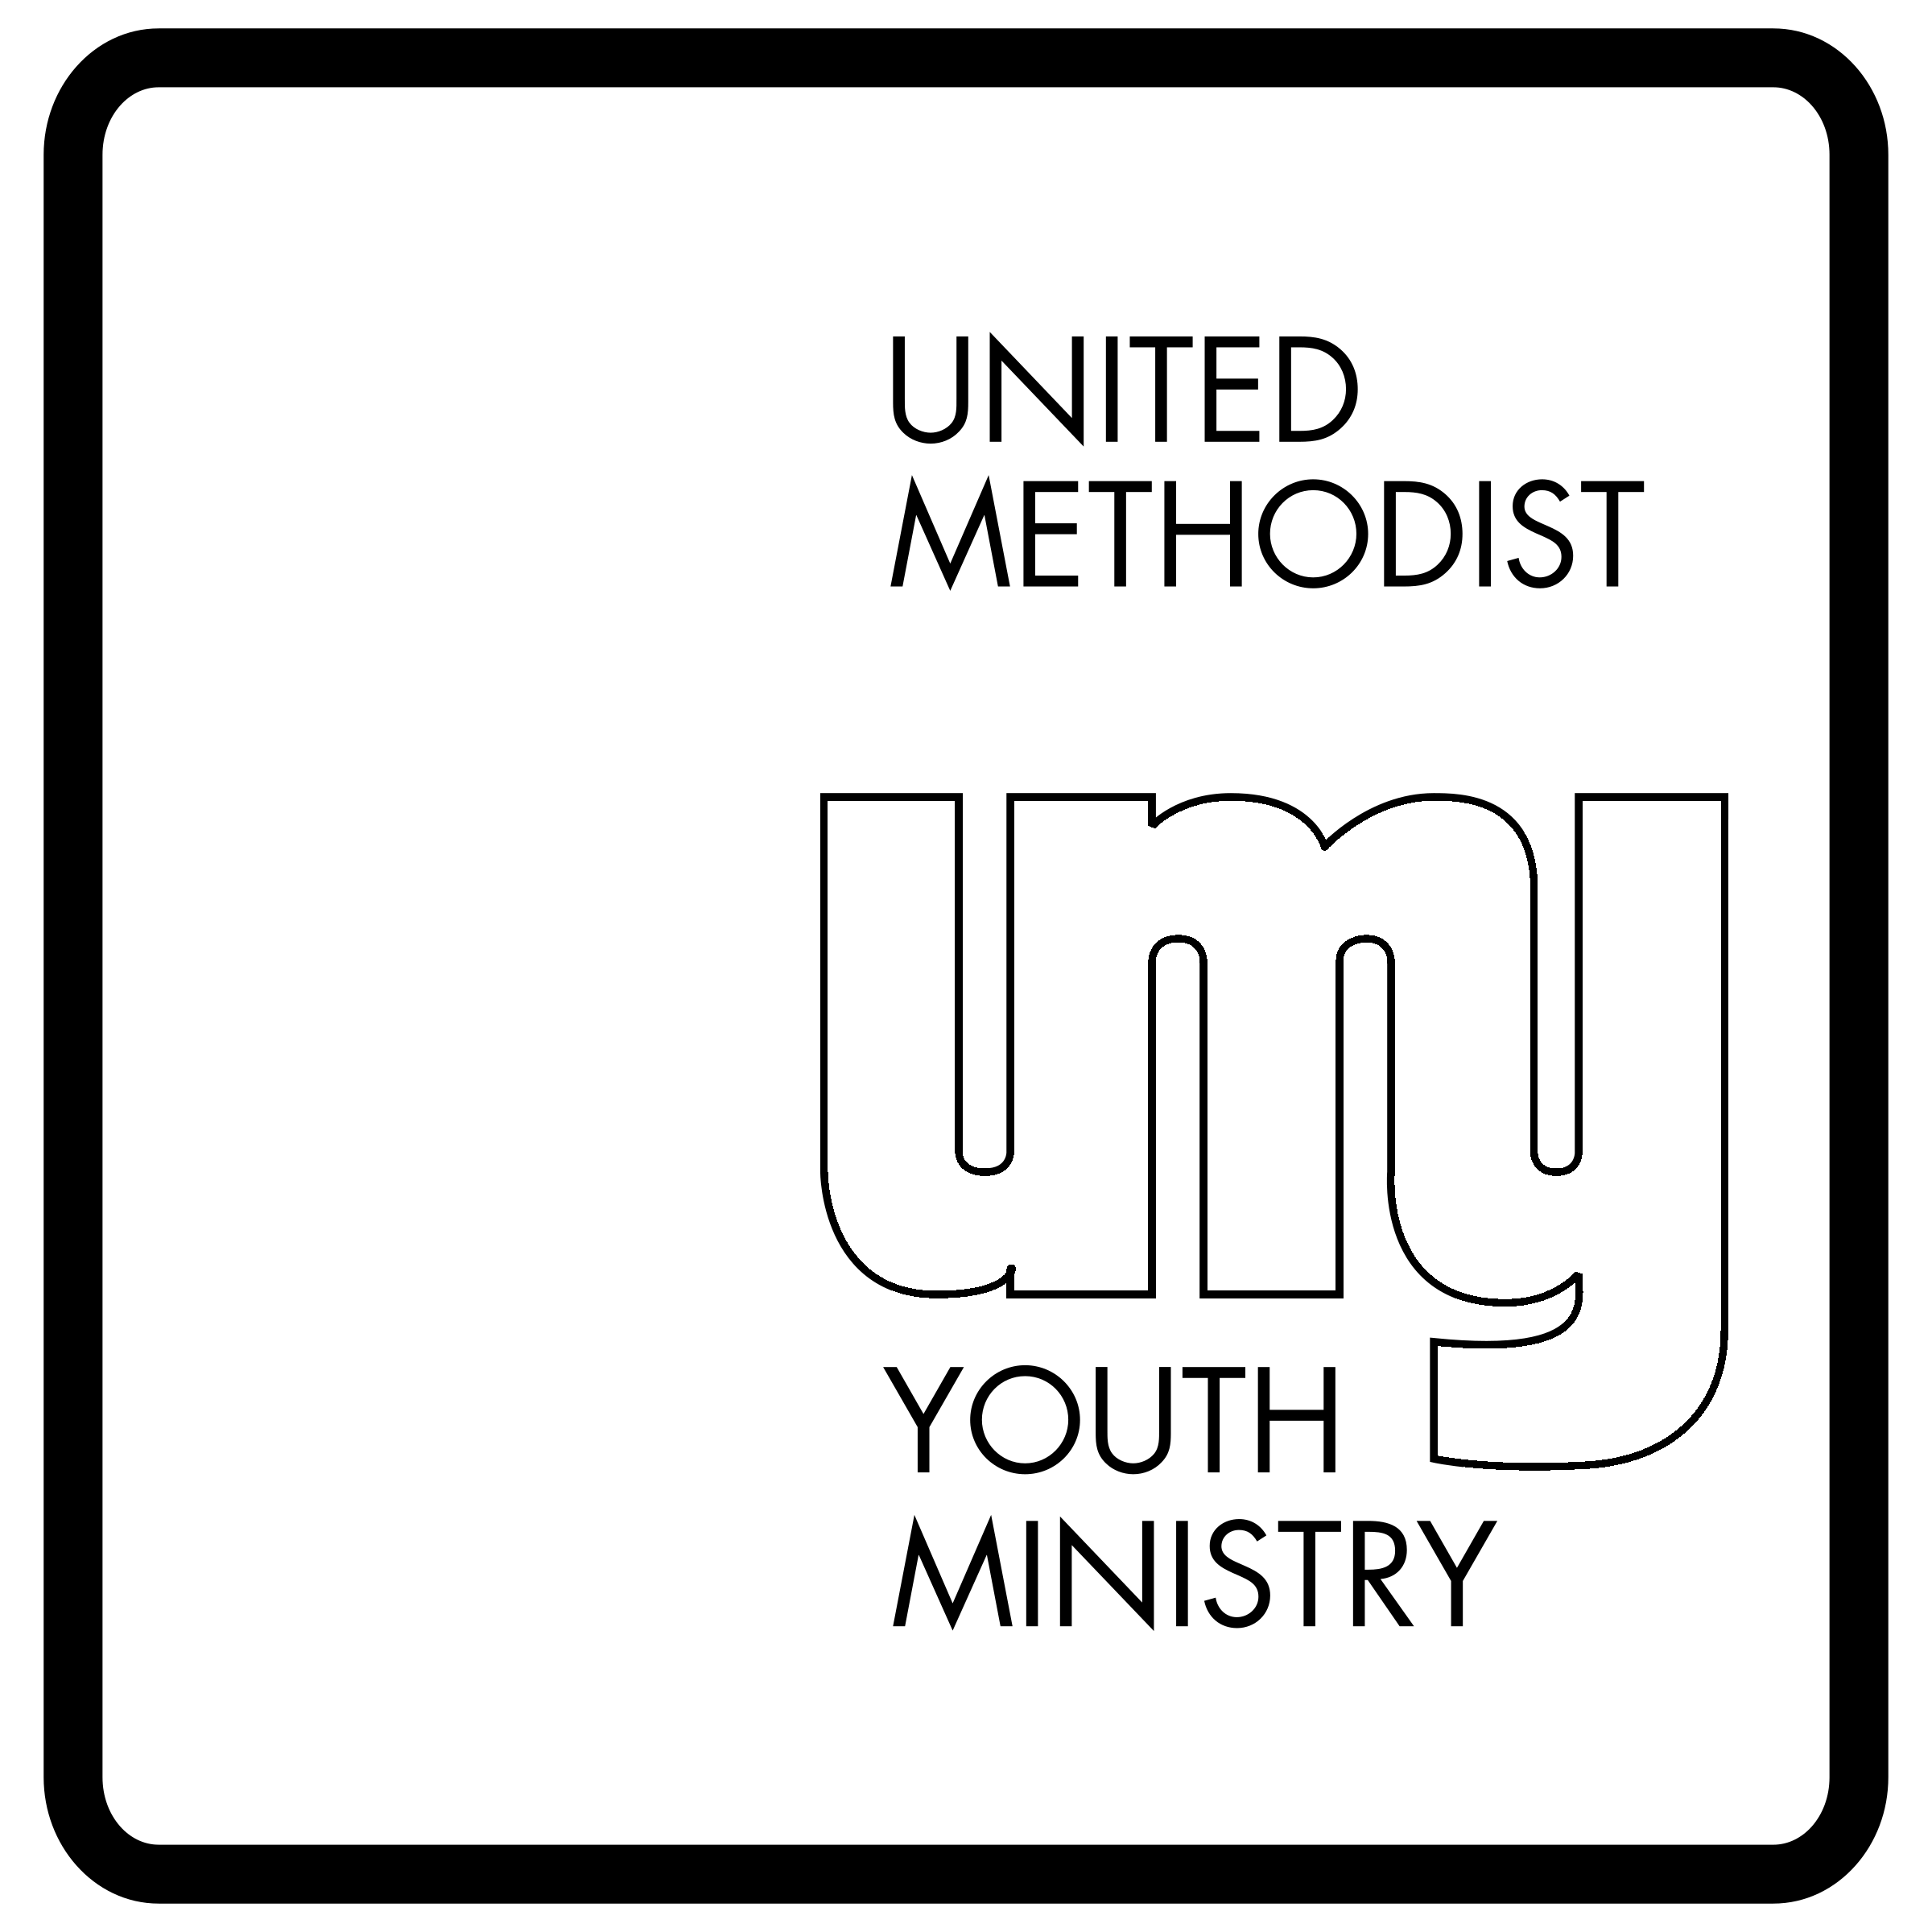 Umy Logo - UMY Logo PNG Transparent & SVG Vector - Freebie Supply